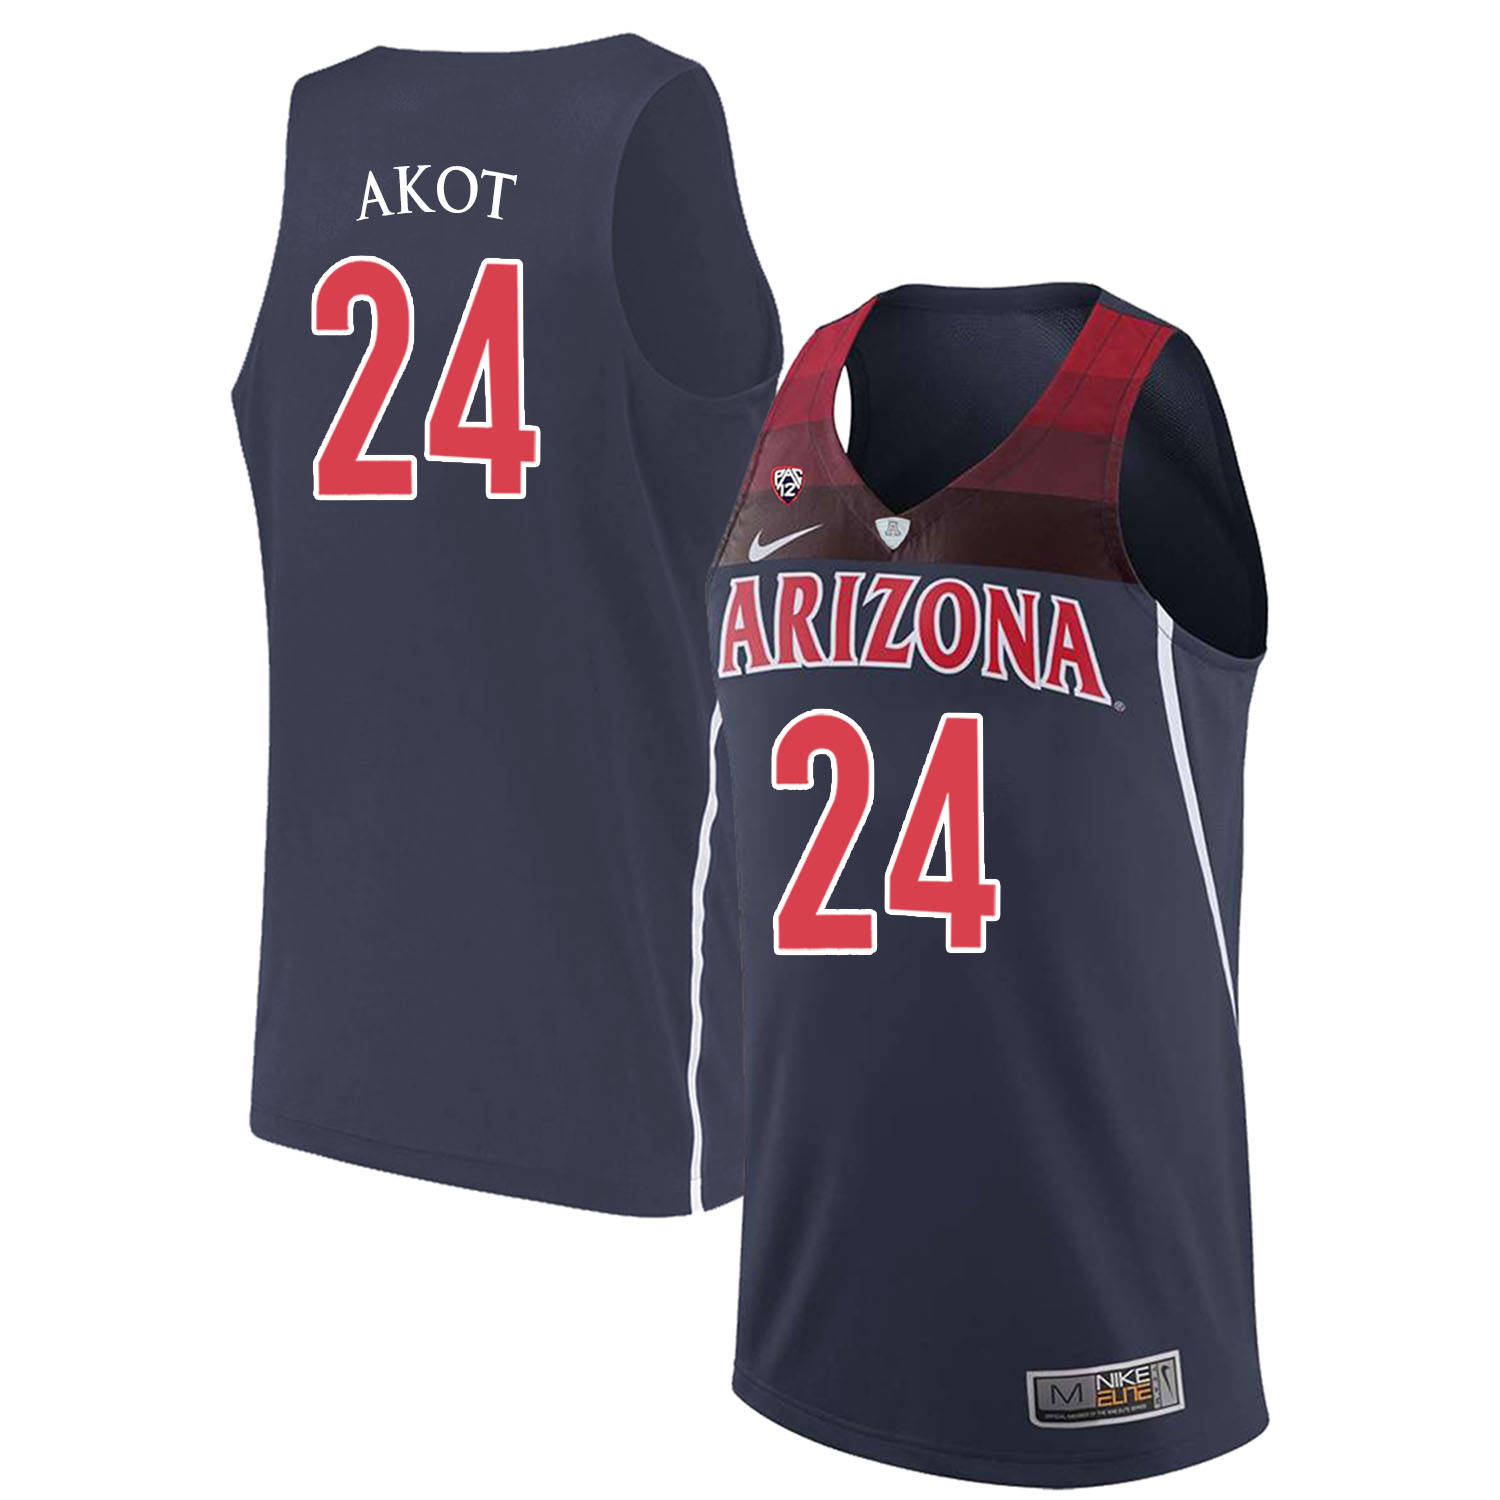 Arizona Wildcats 24 Emmanuel Akot Navy College Basketball Jersey